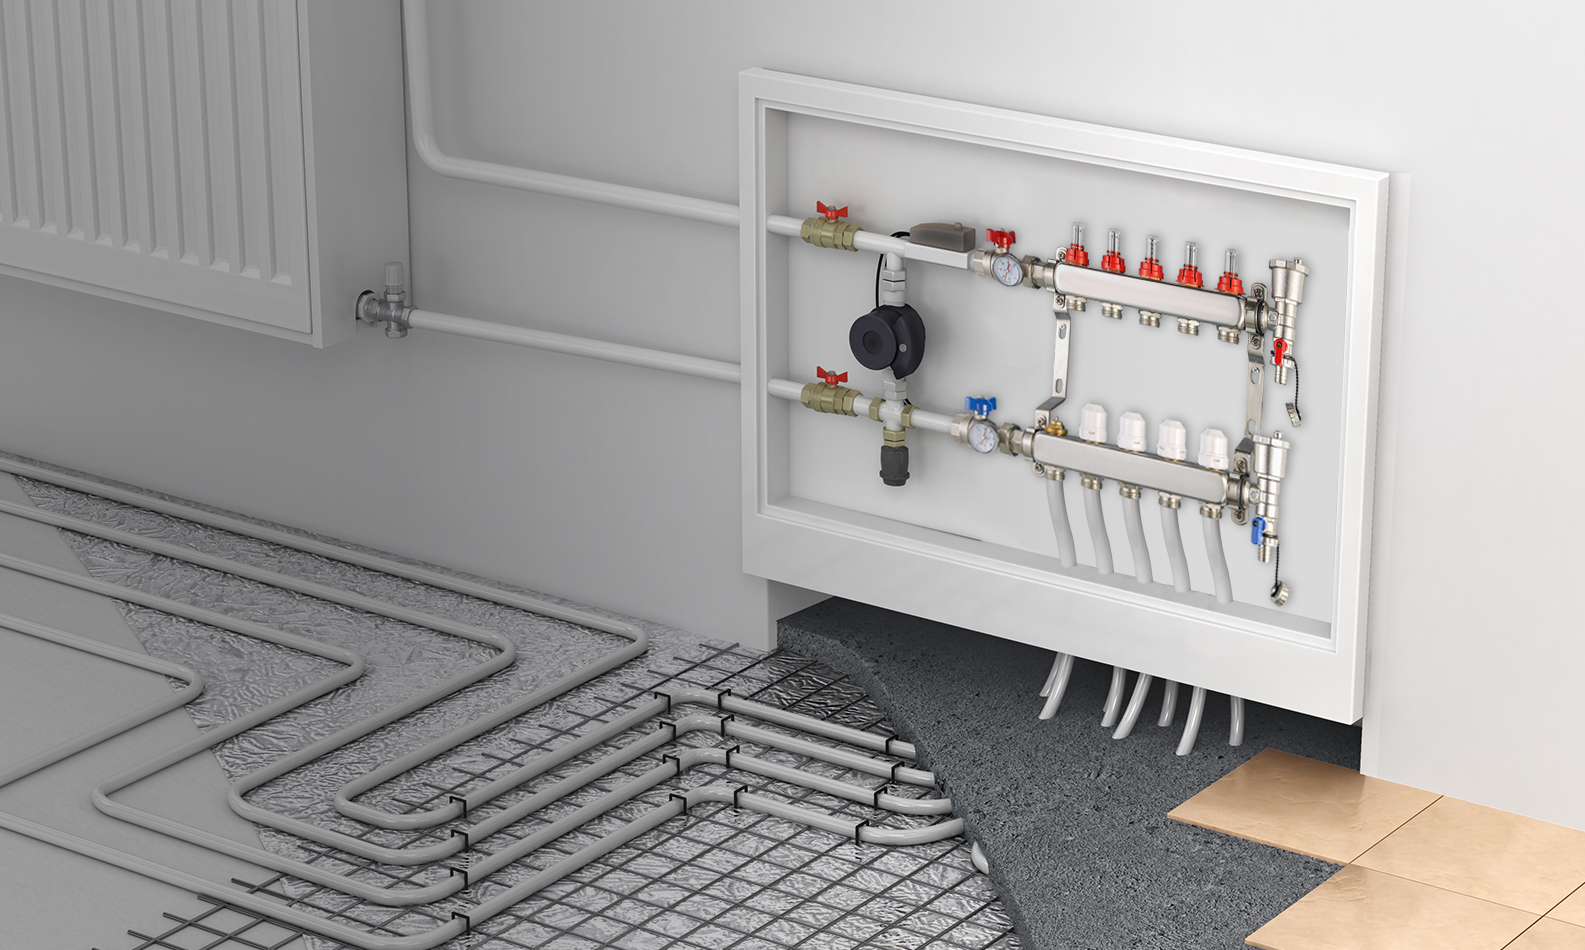 How to Install Underfloor Heating Manifold?